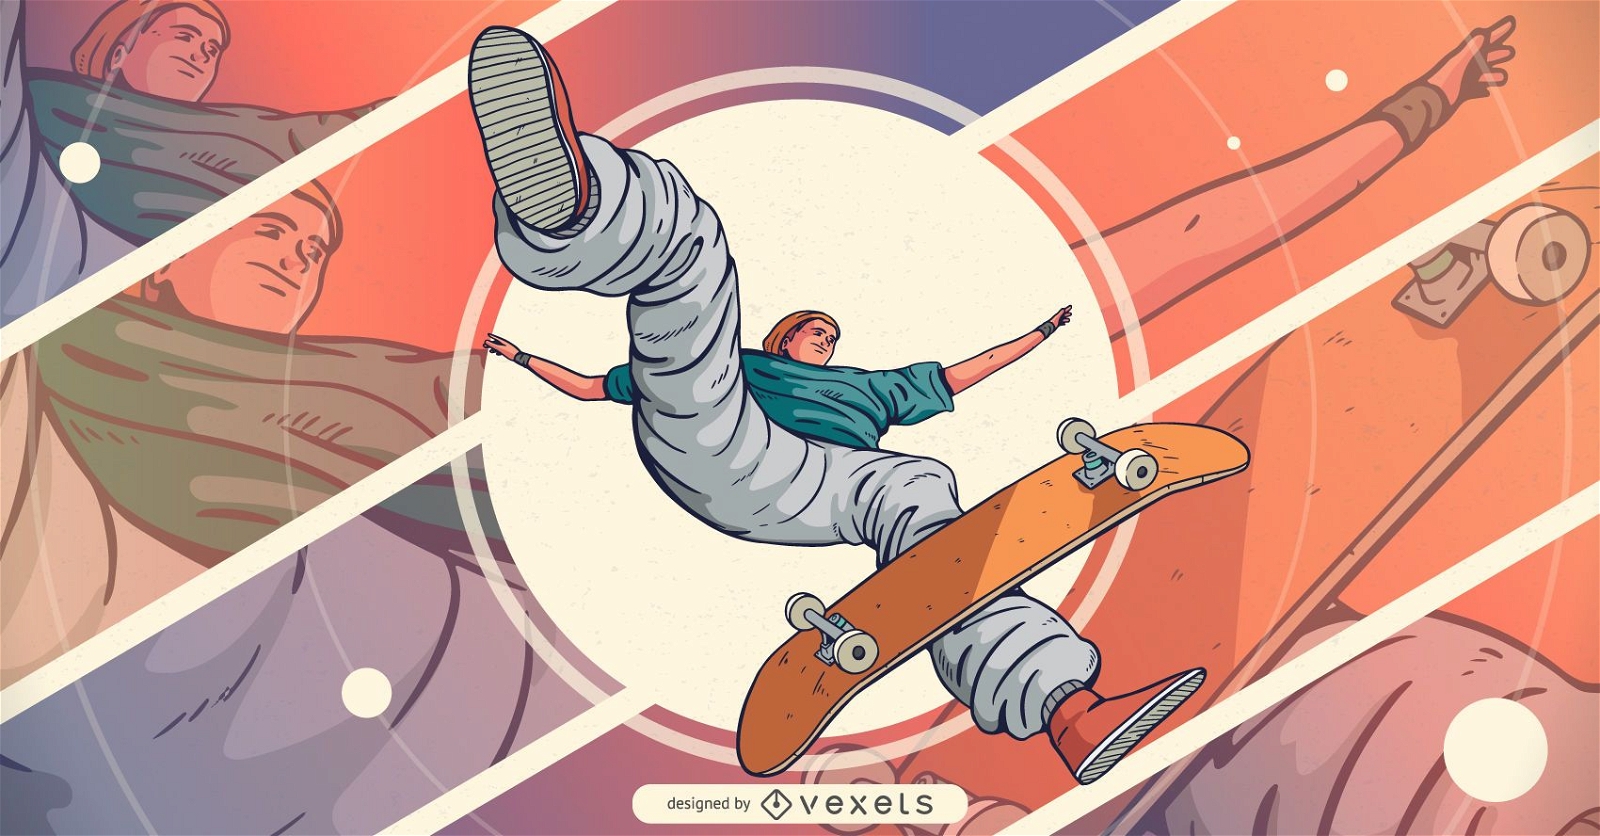 Skater jumping character illustration